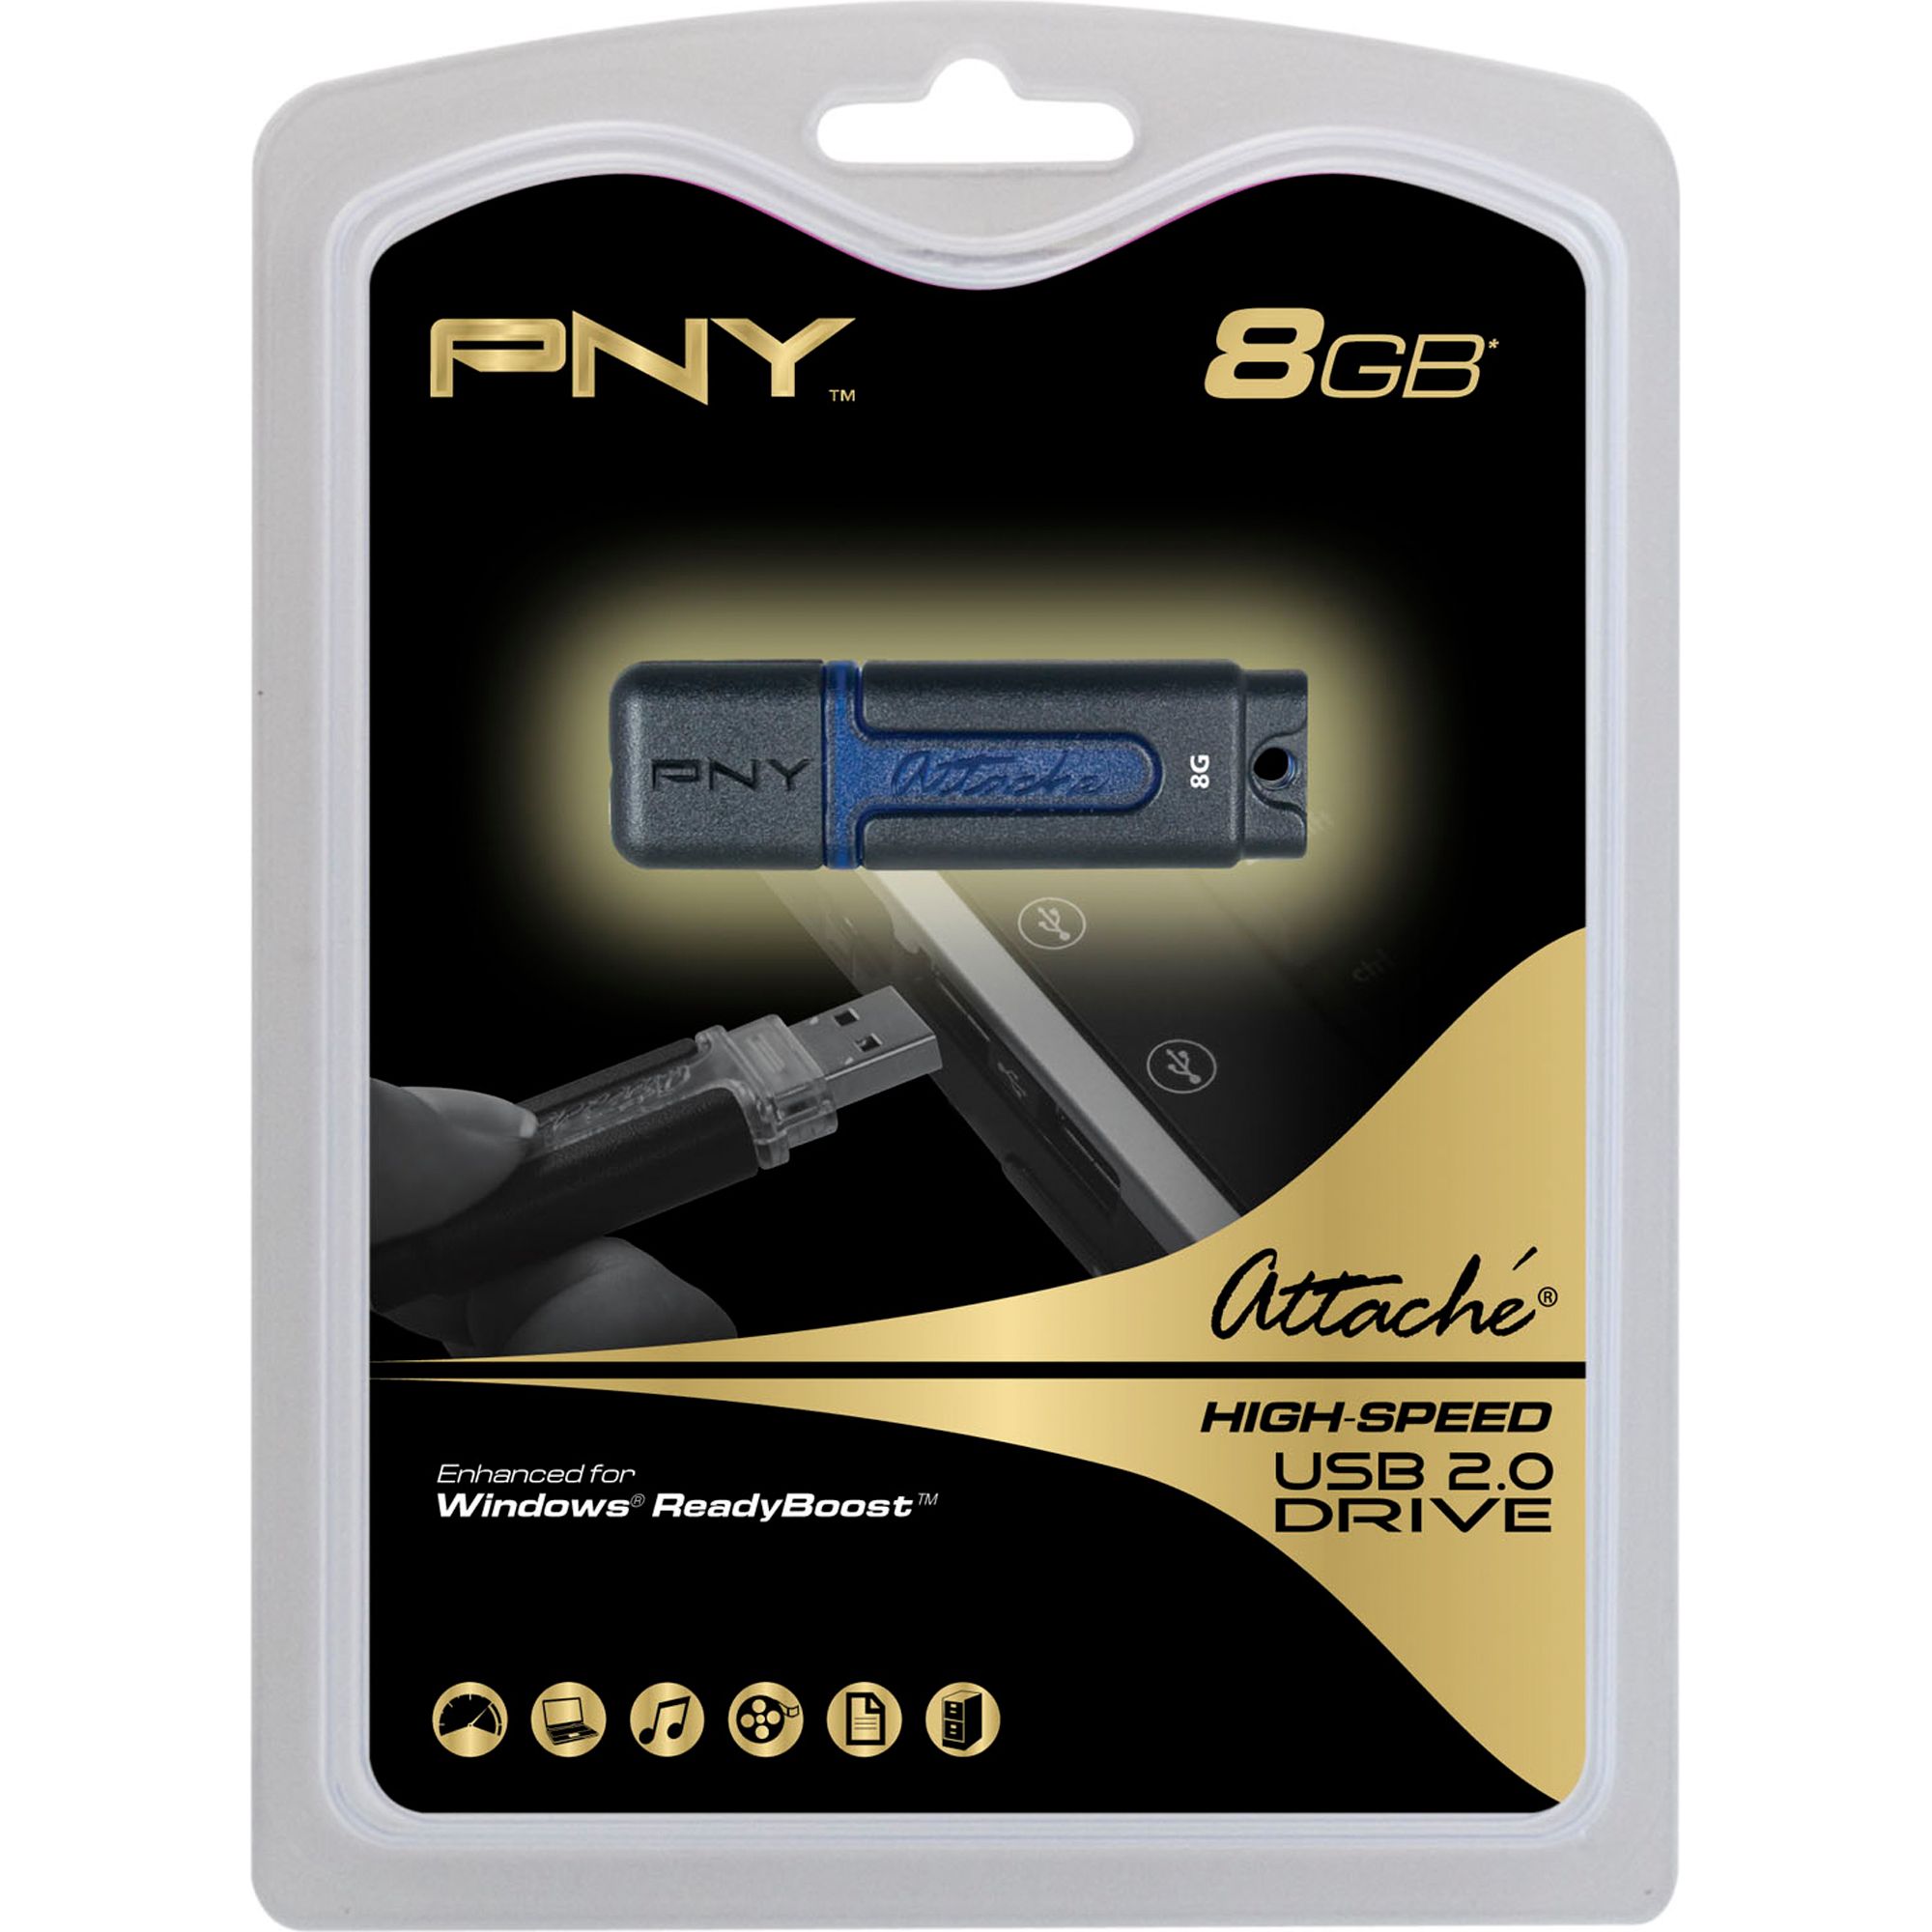 PNY 8GB Attache USB 2.0 Flash Drive